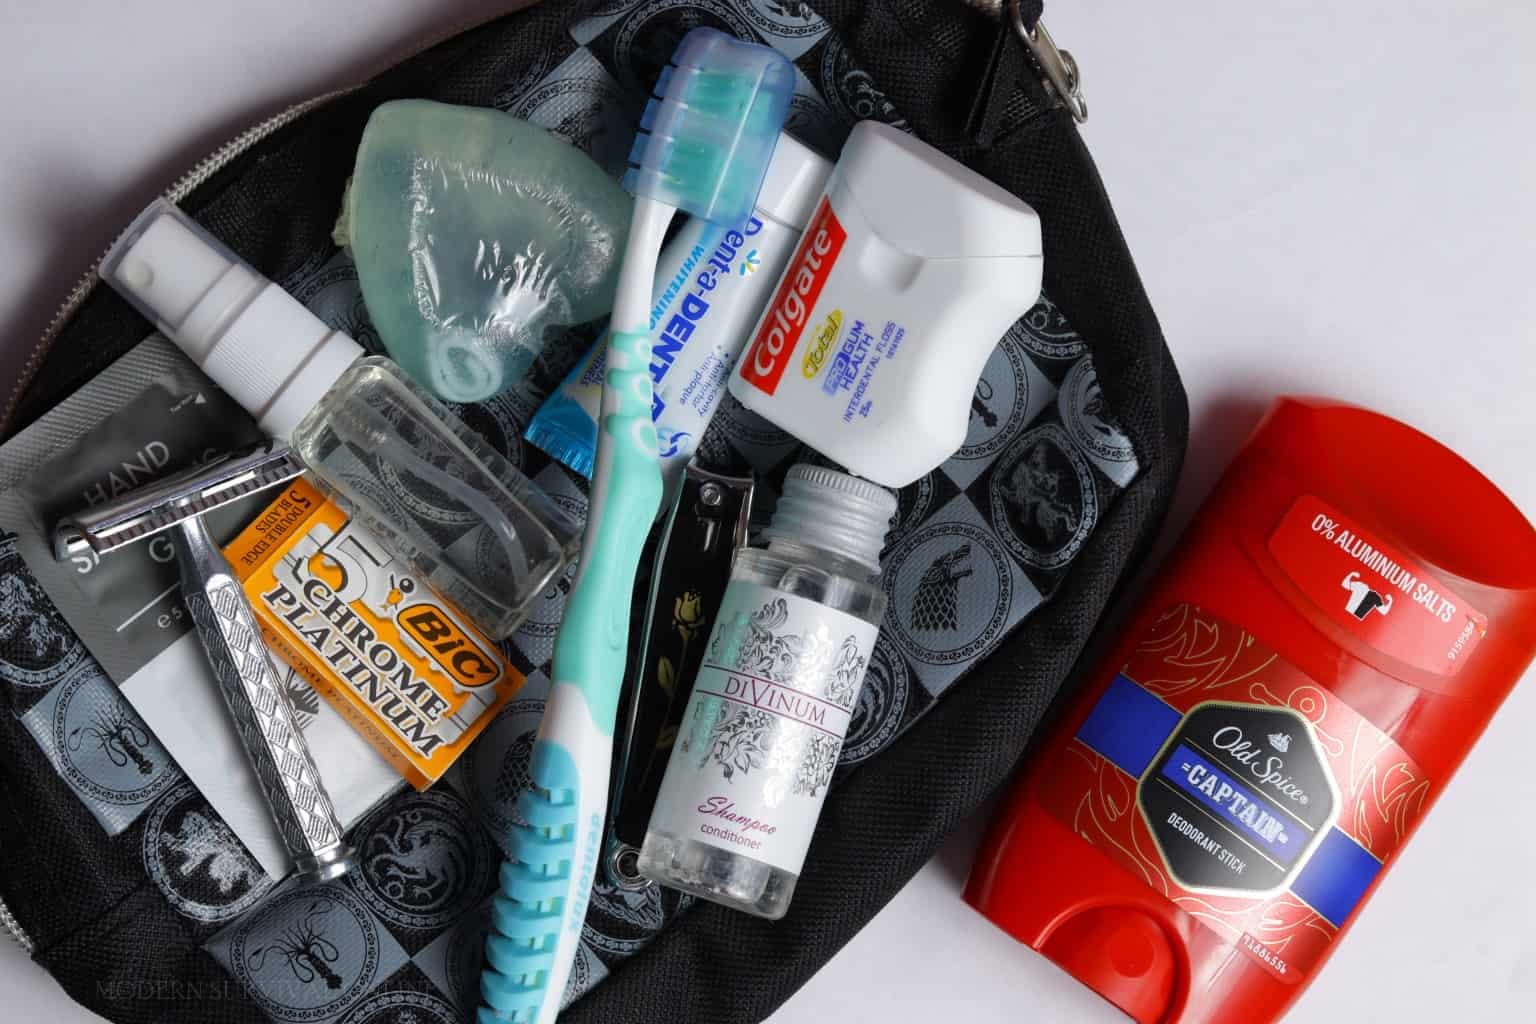 hygiene kit with toothbrush floss deodorant razor shampoo inside a pouch